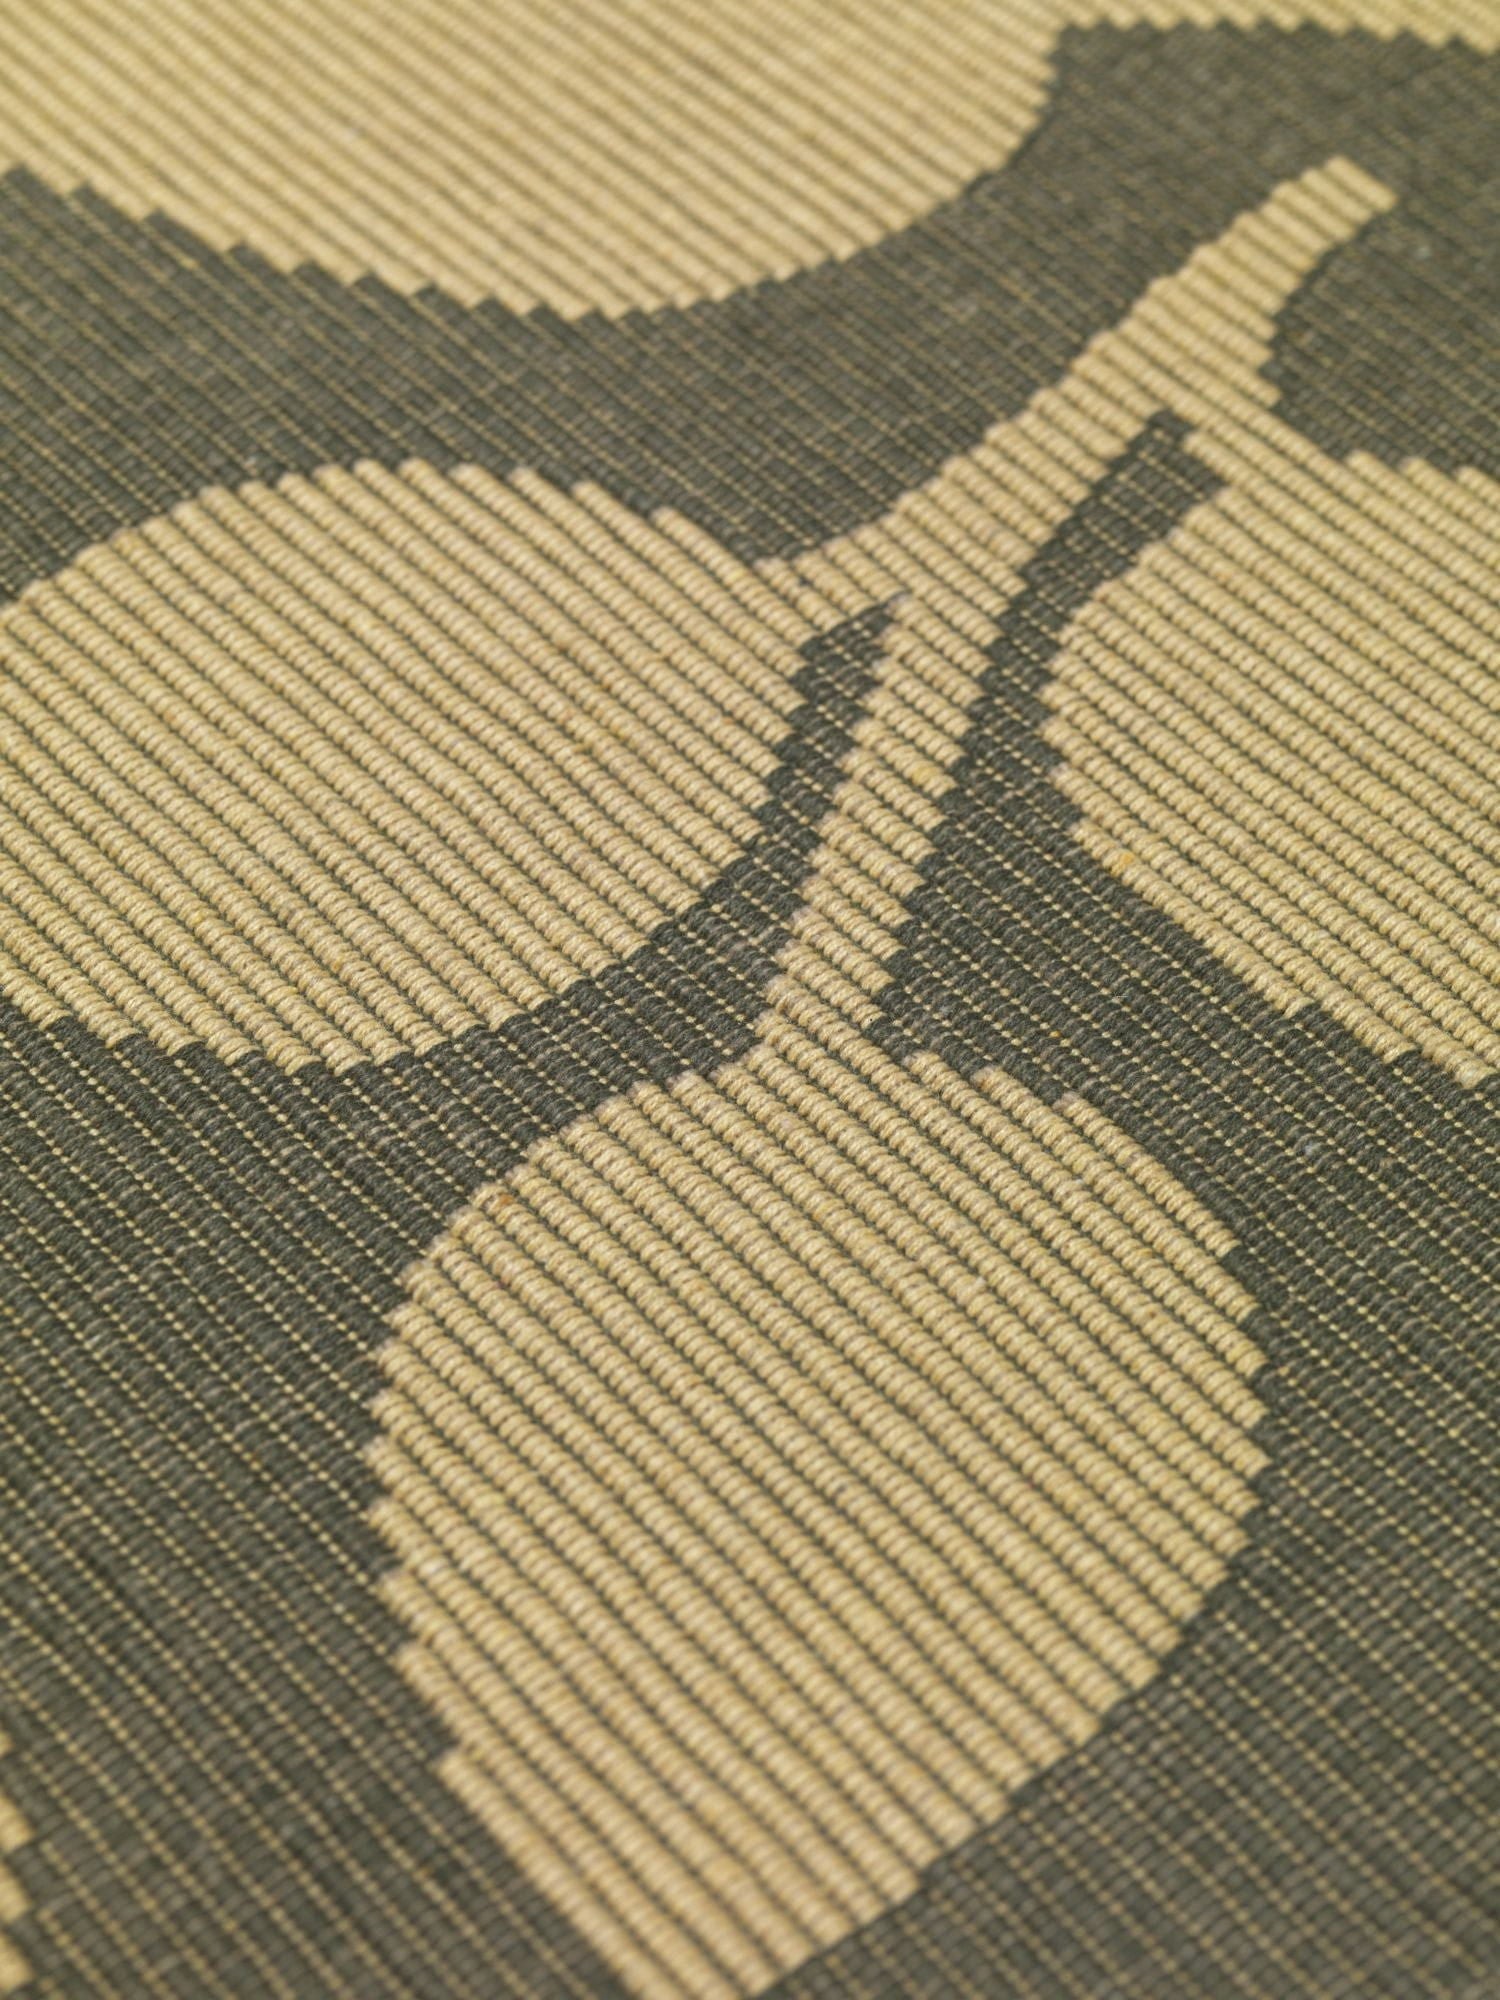 Rosendahl Rosendahl Textiles Outdoor Natura 43x30 Cm, Green